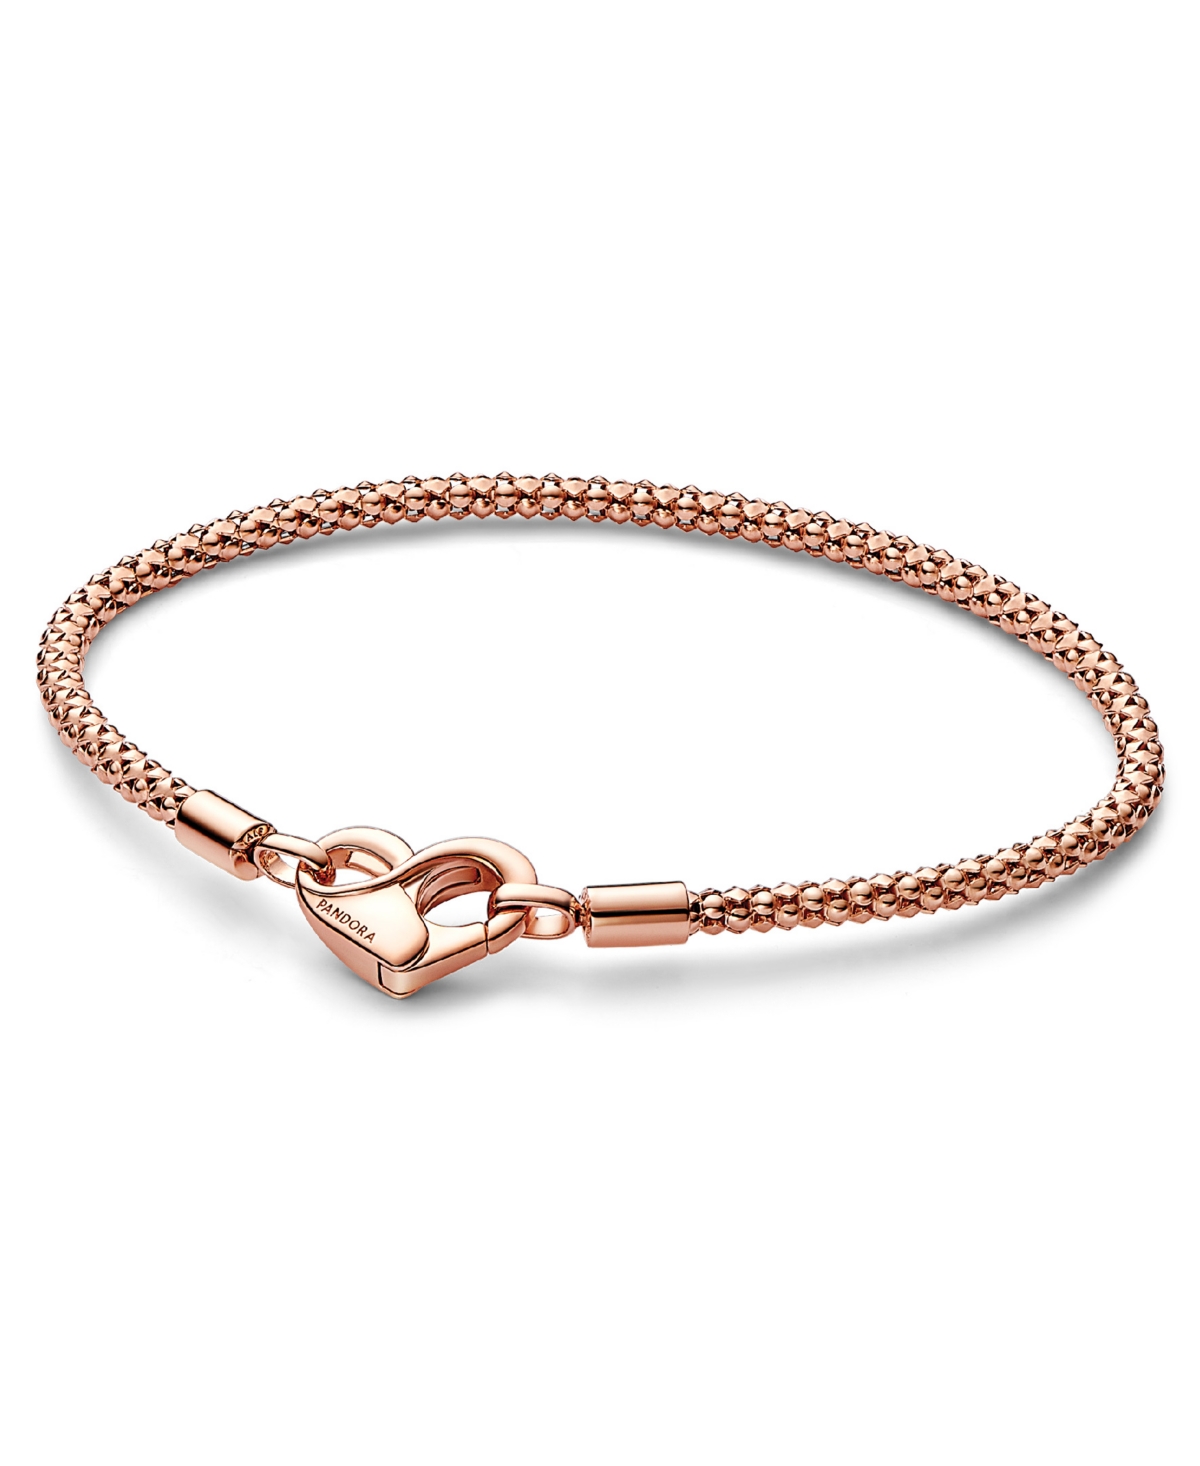 Moments Studded Chain Bracelet - Gold